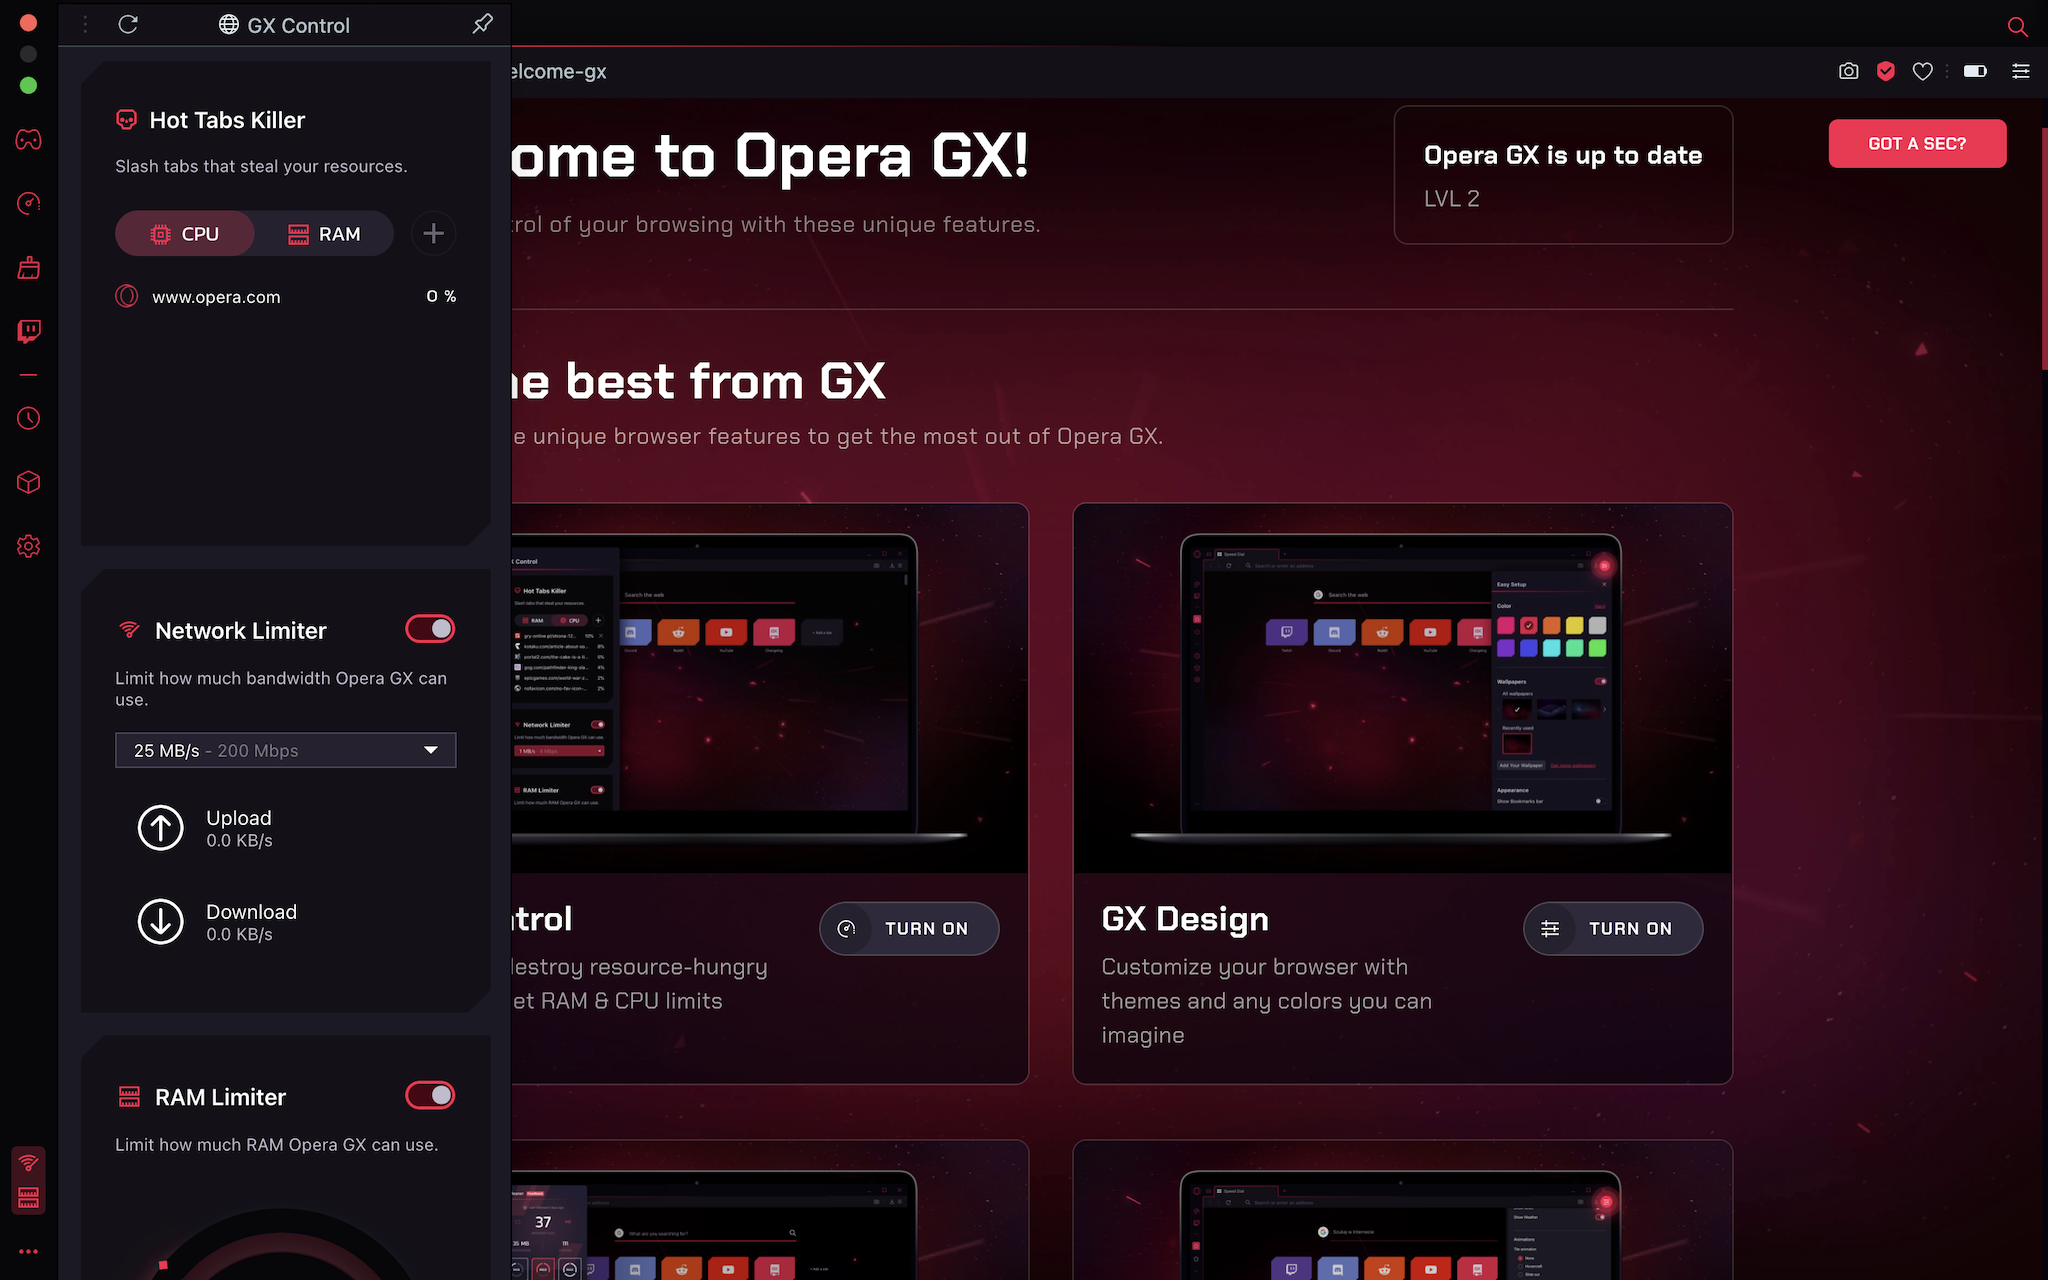 how to use the opera gx vpn